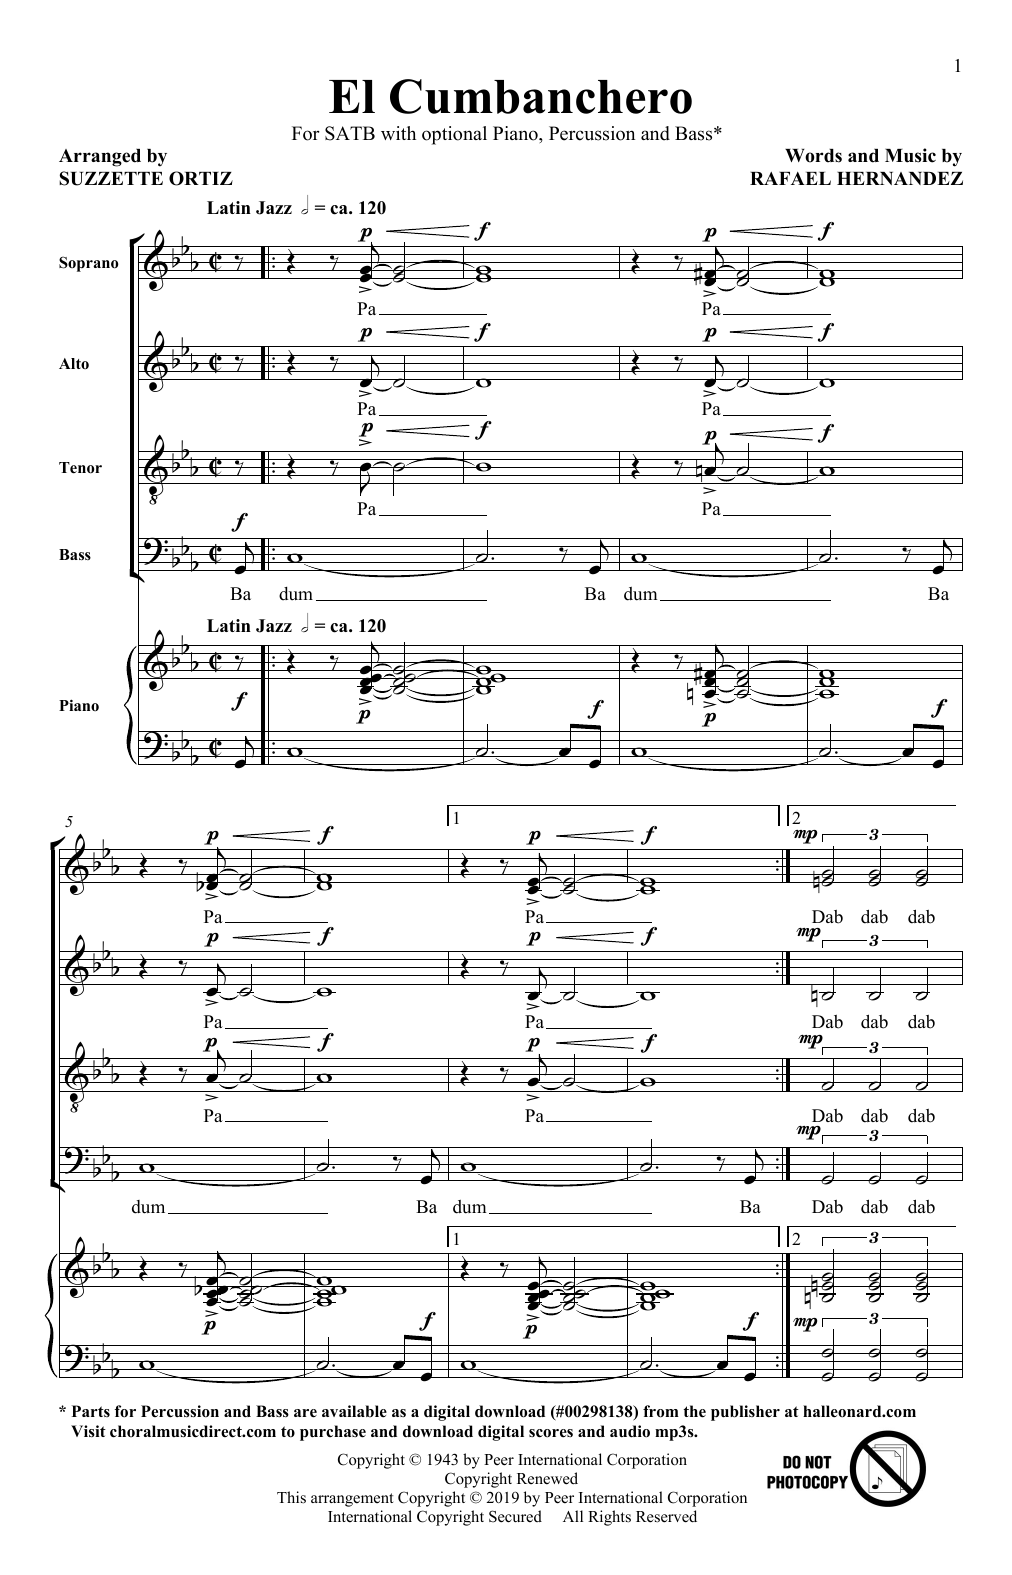 Rafael Hernandez El Cumbanchero (arr. Suzette Ortiz) Sheet Music Notes & Chords for SATB Choir - Download or Print PDF